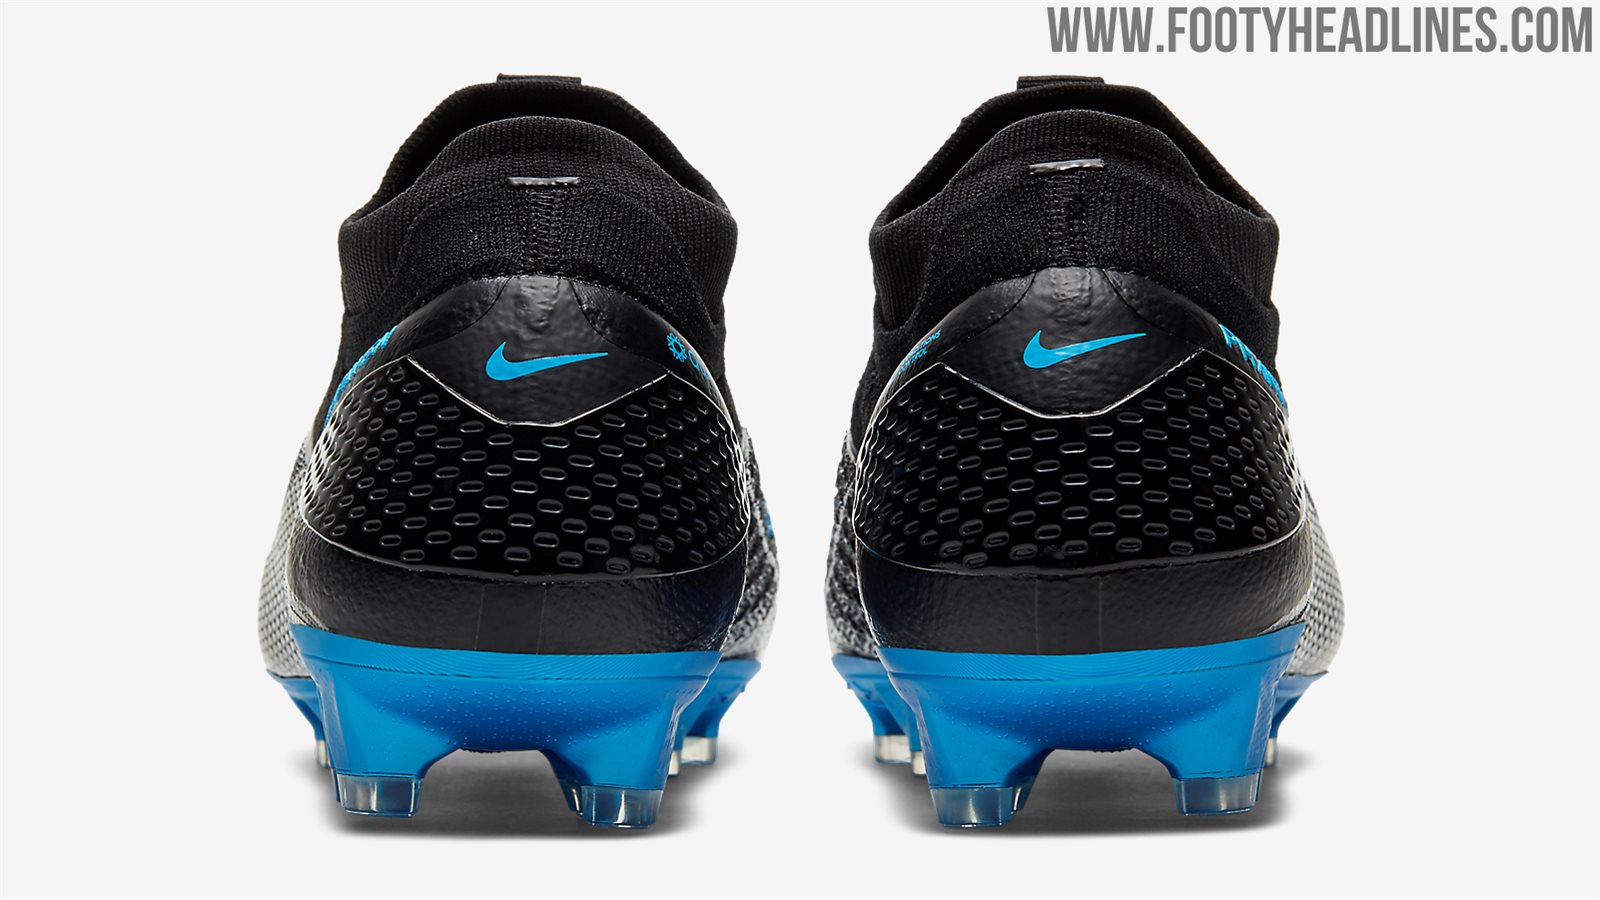 Classy Black & Laser Blue Nike Phantom Vision 2 Boots Revealed - Footy ...